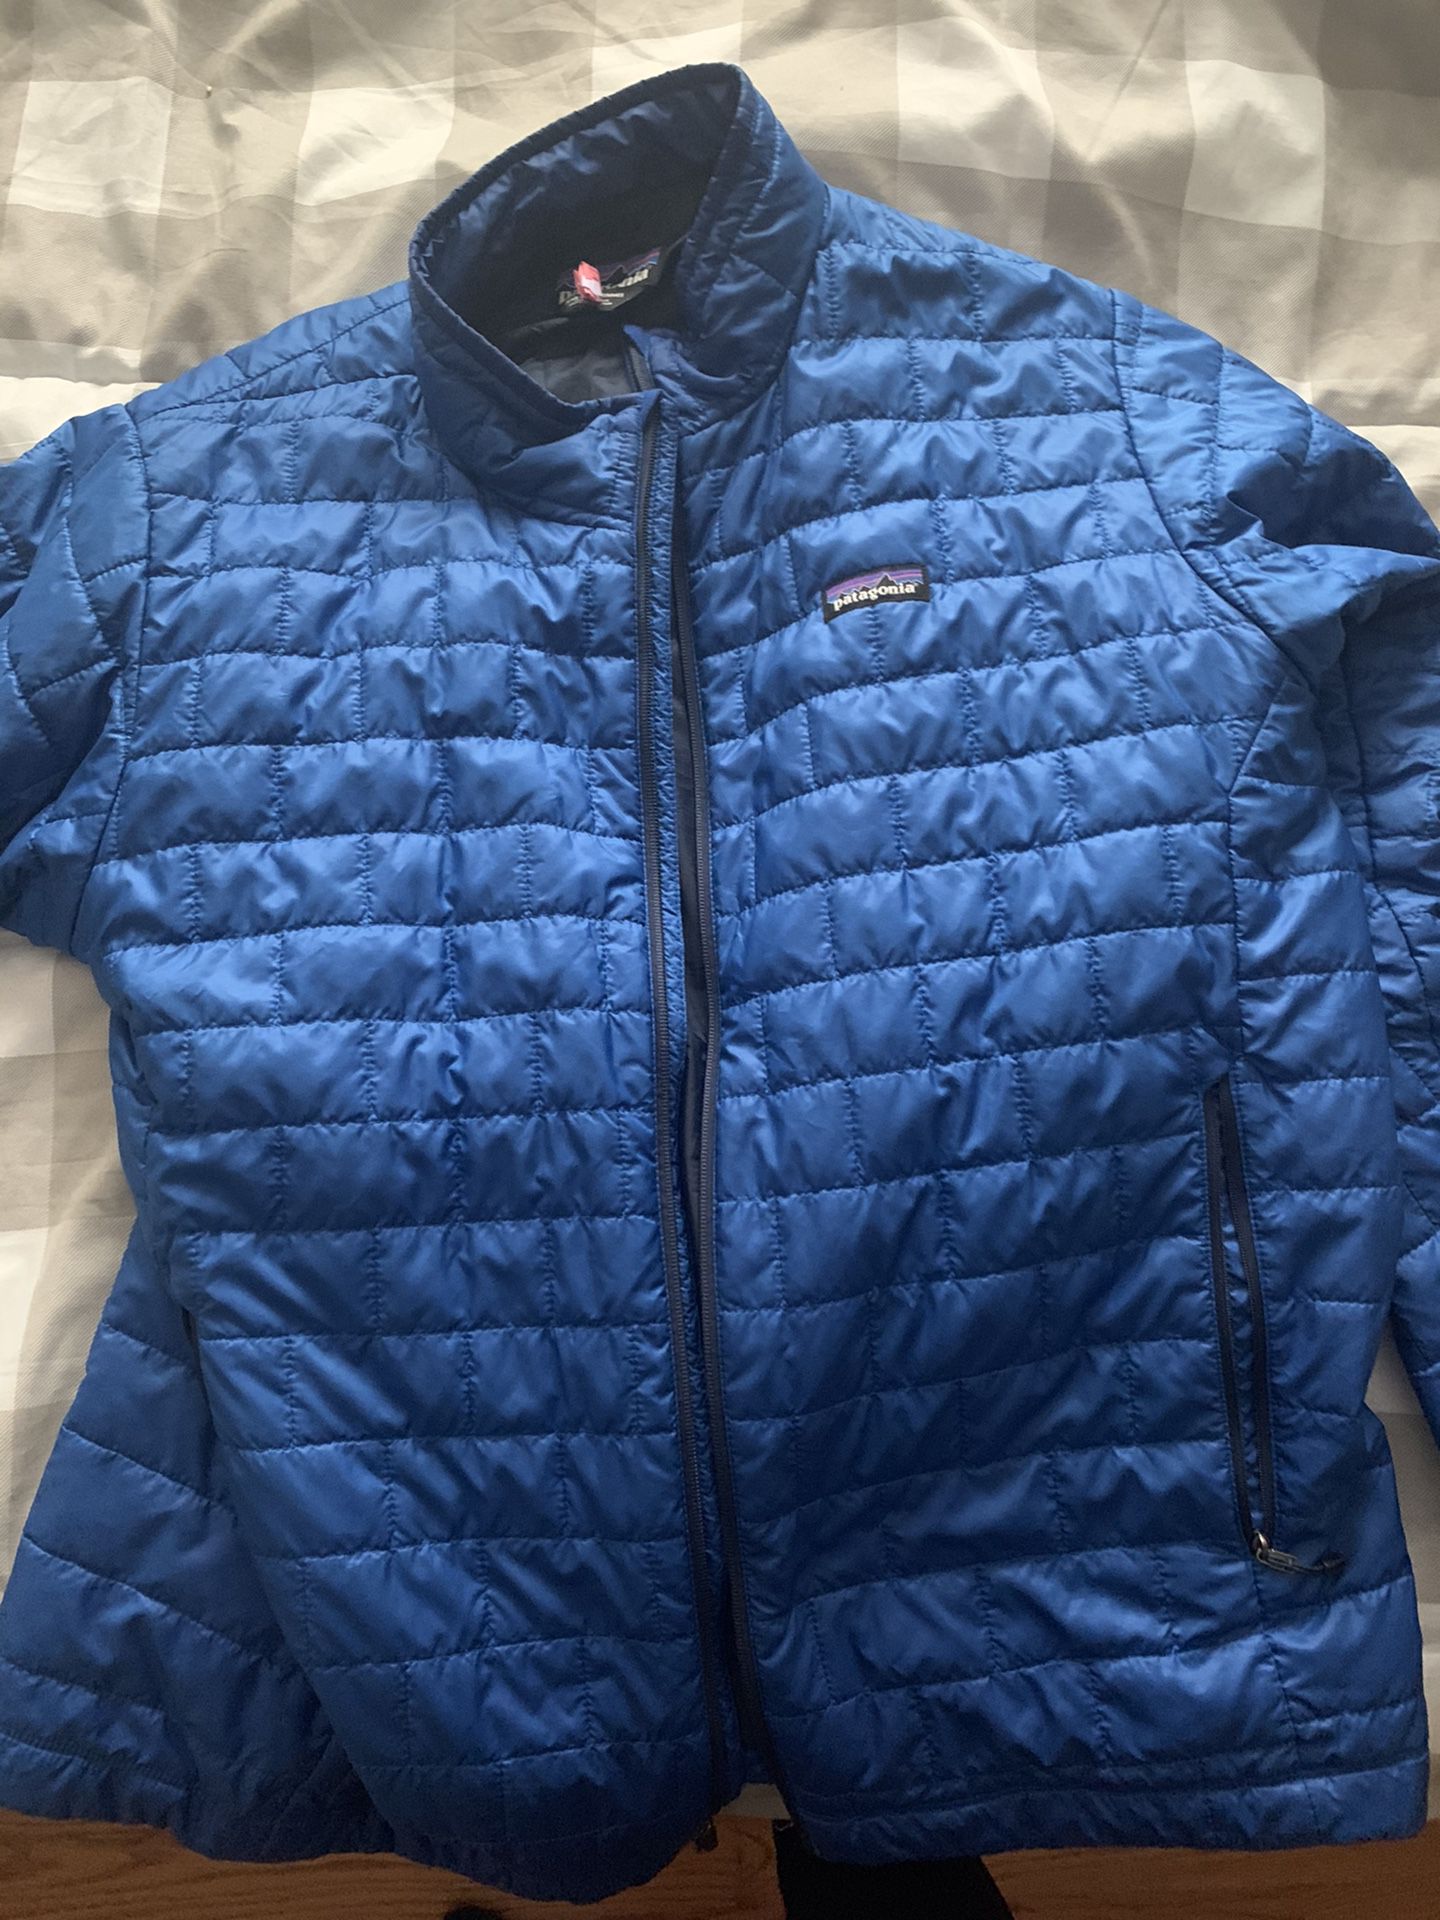 Xxl Patagonia jacket